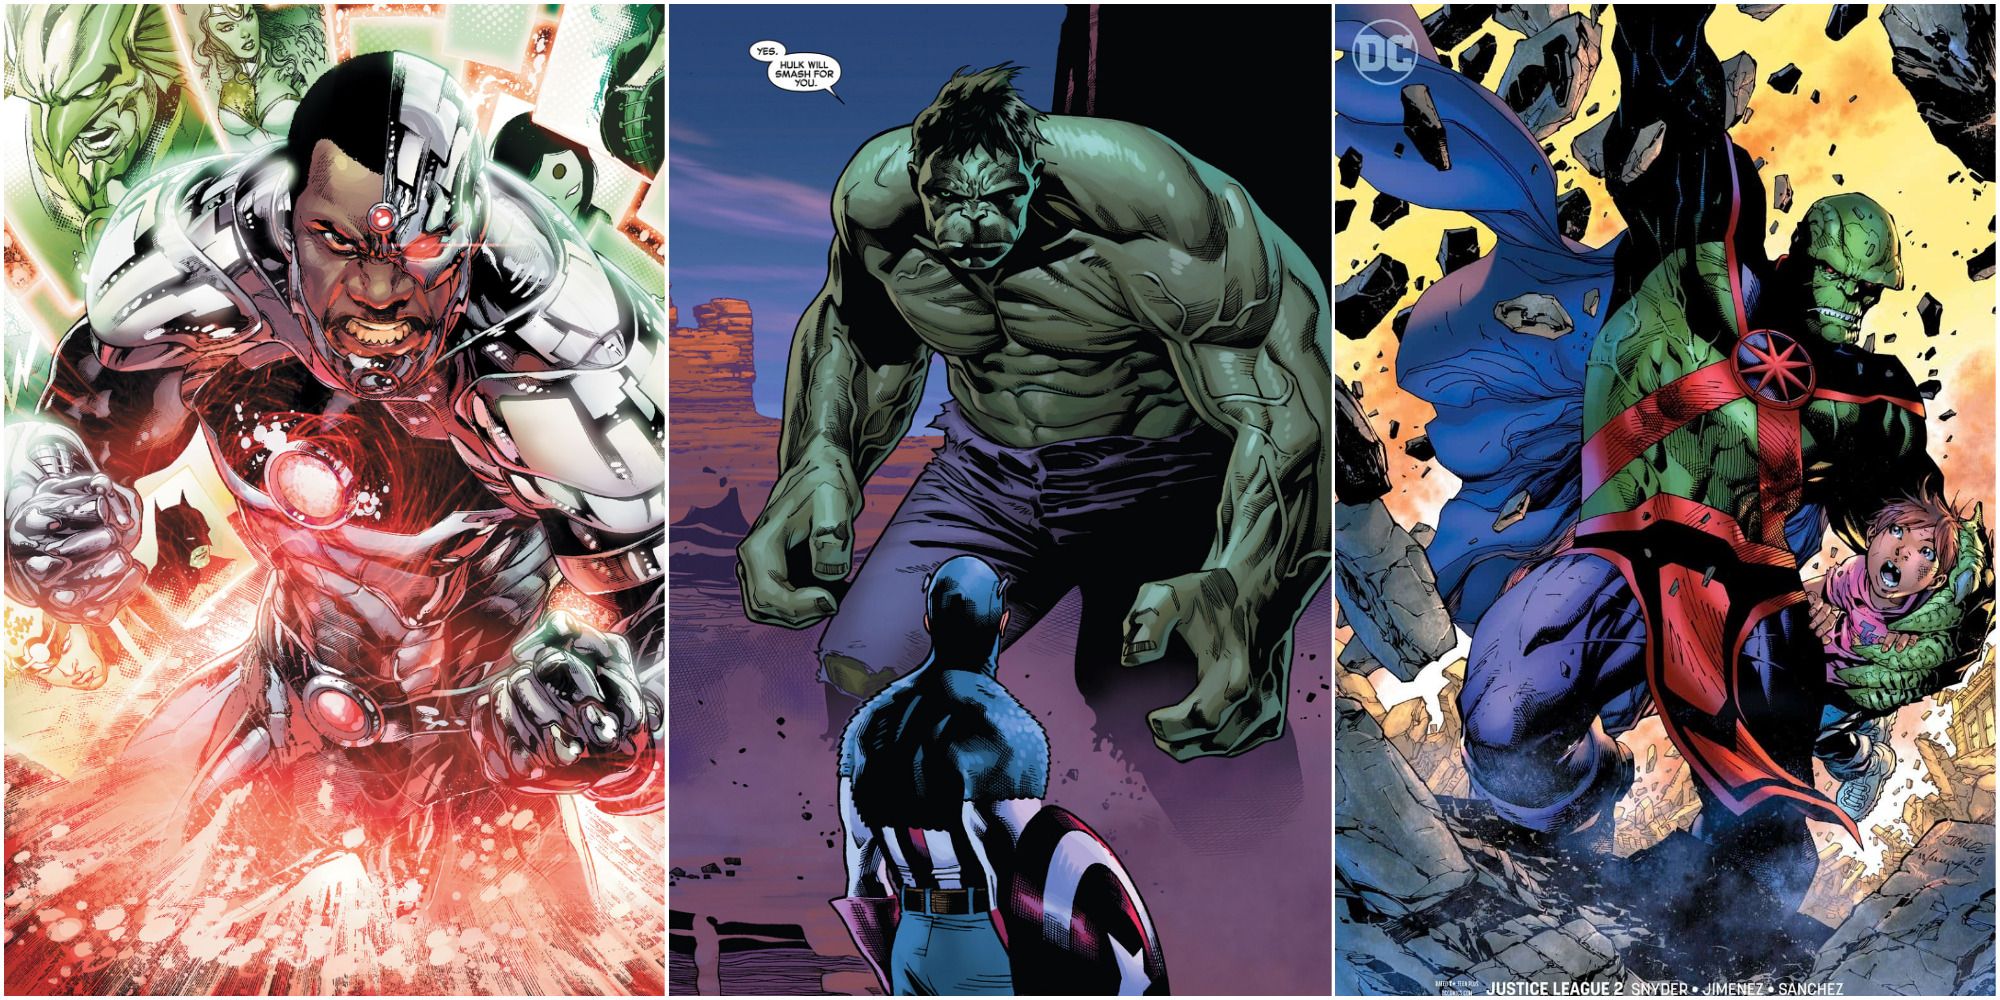 Cyborg, Hulk, and Martian Manhunter